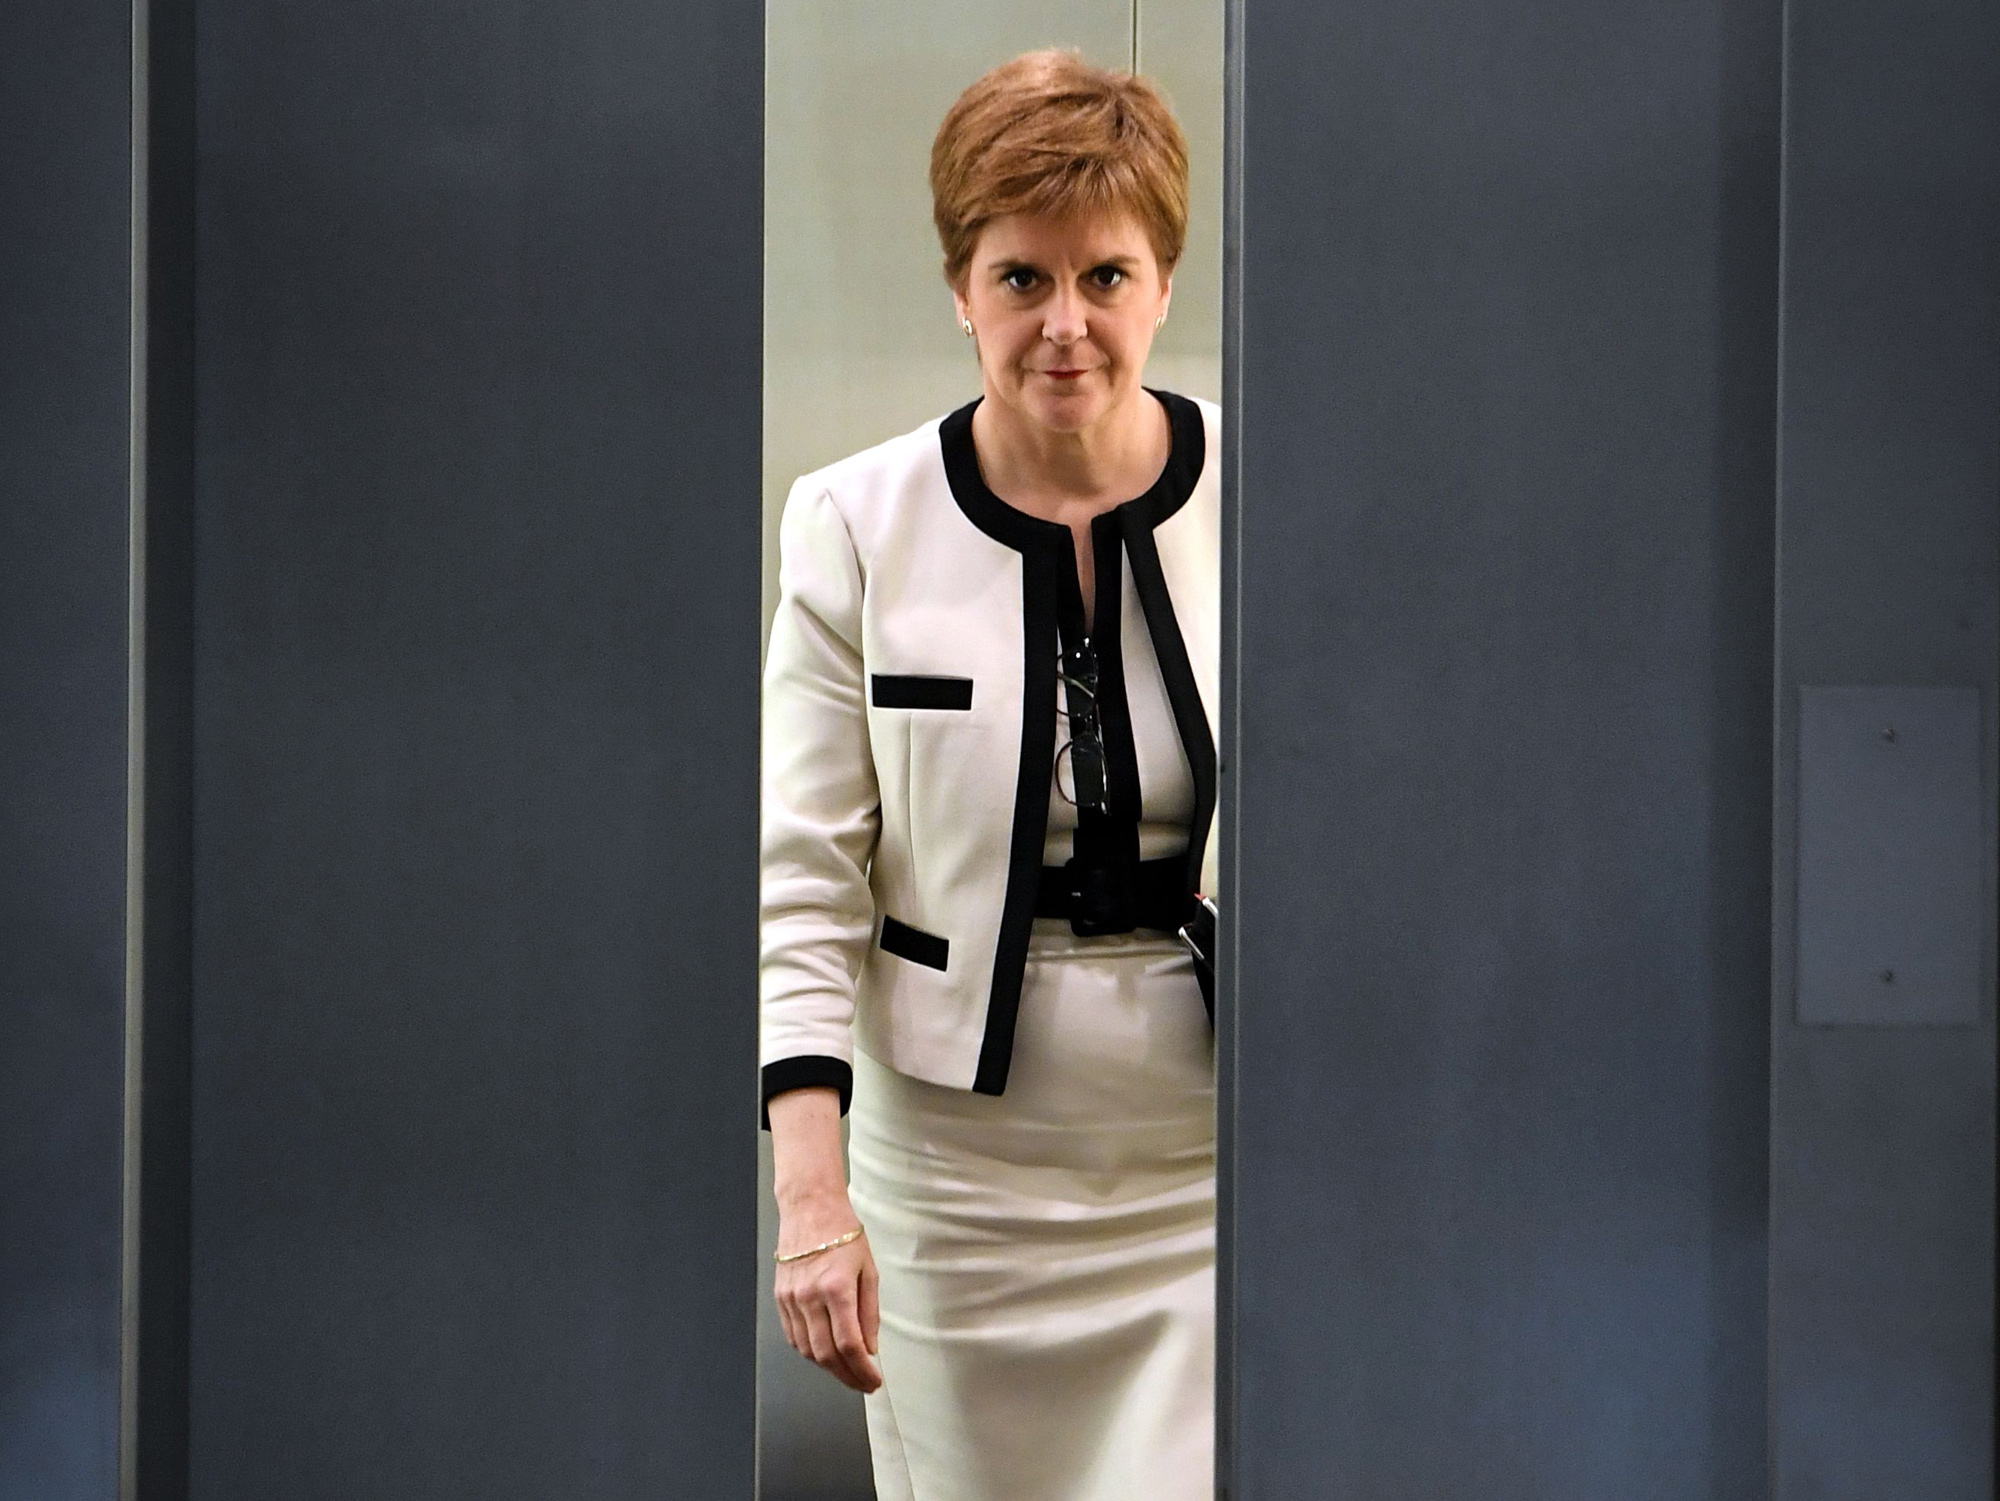 Nicola Sturgeon arrives for a session at&nbsp;Scottish Parliament in Edinburgh, Scotland, on Sept. 1.